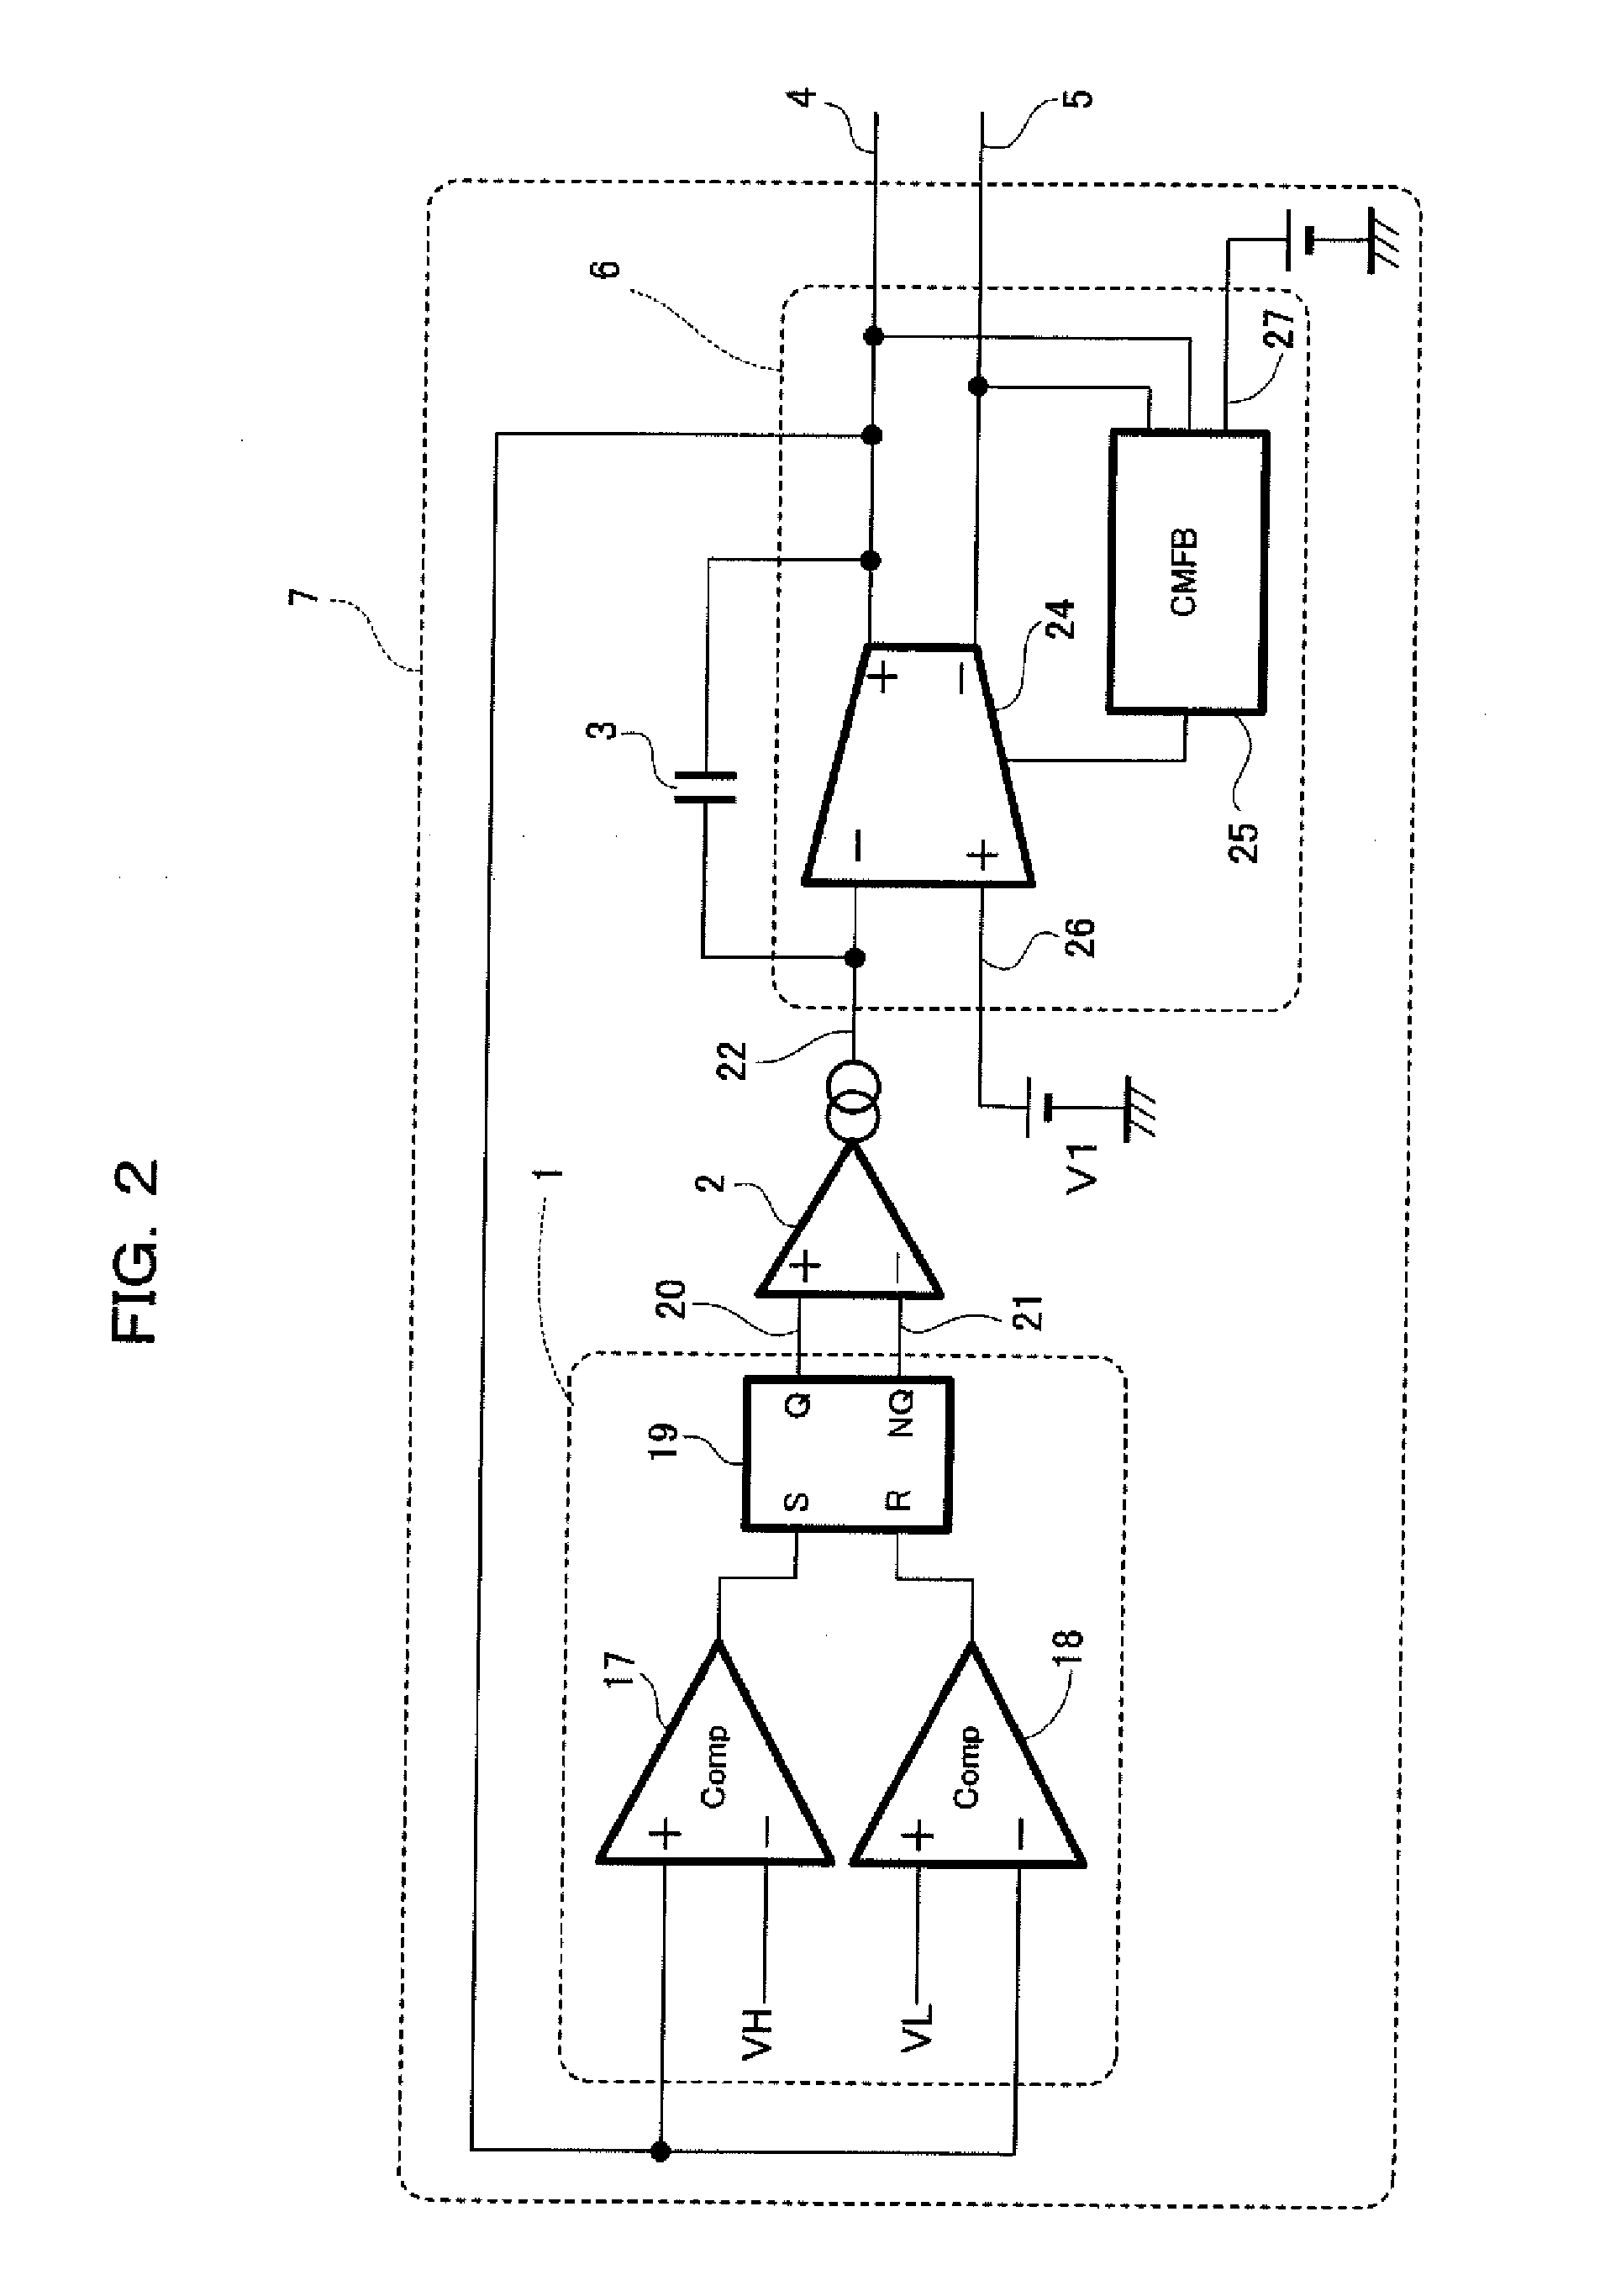 Triangle oscillator and pulse width modulator